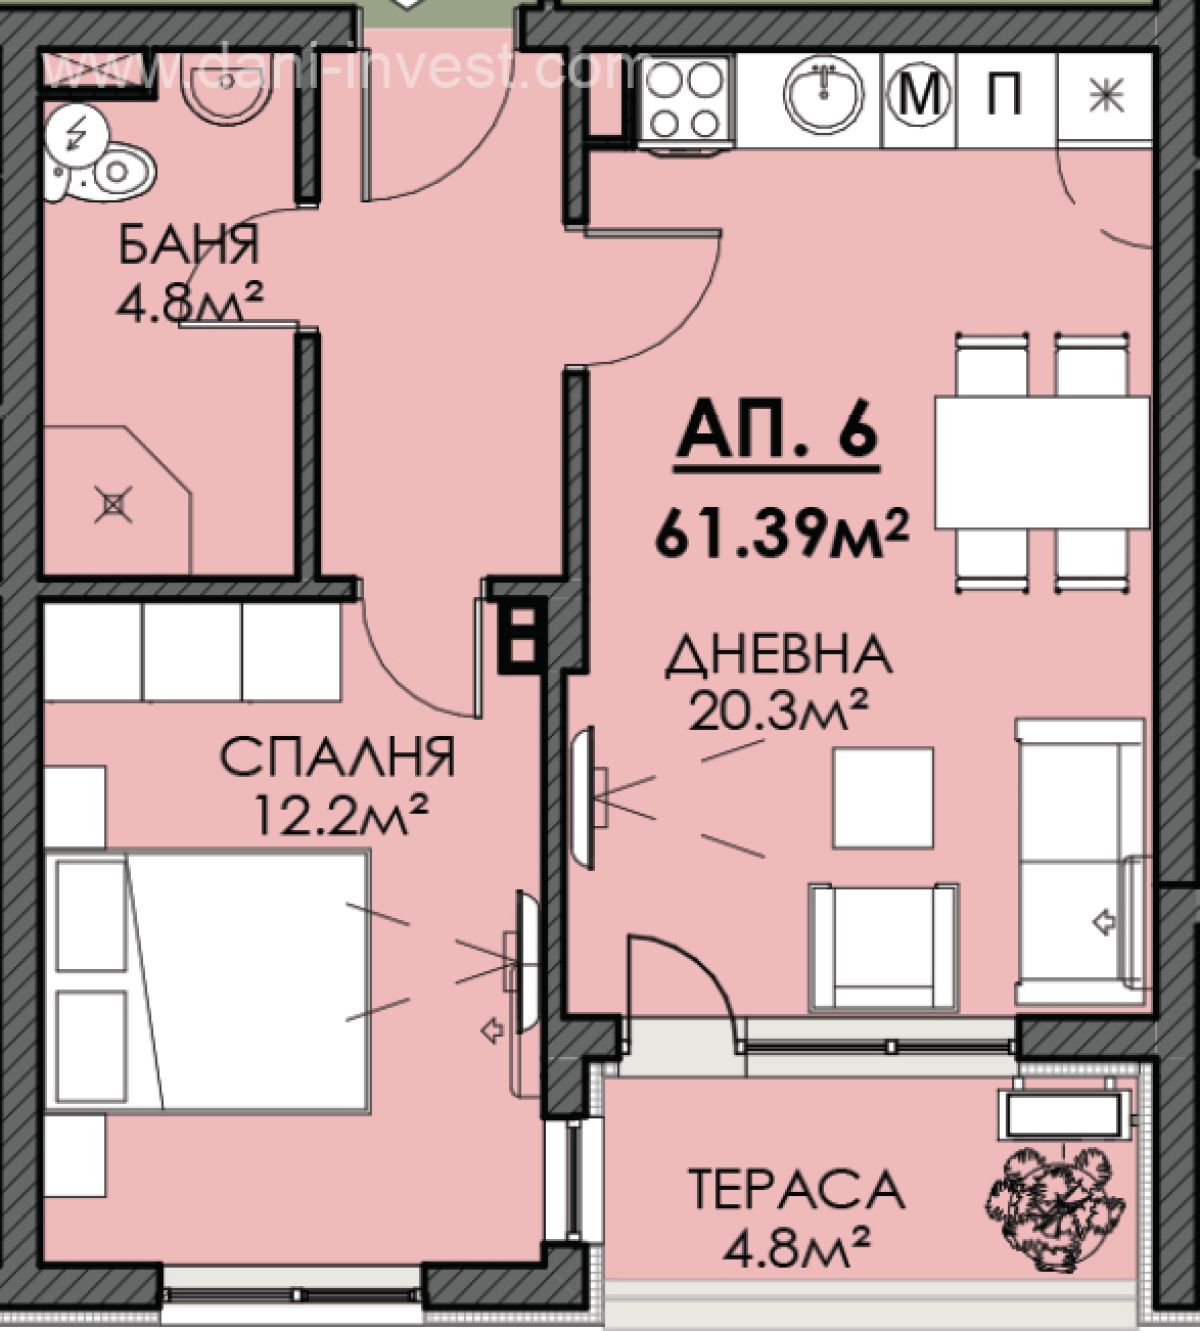 Двустаен апартамент с площ 64,19 кв.м. в ж.к. Меден Рудник, гр.